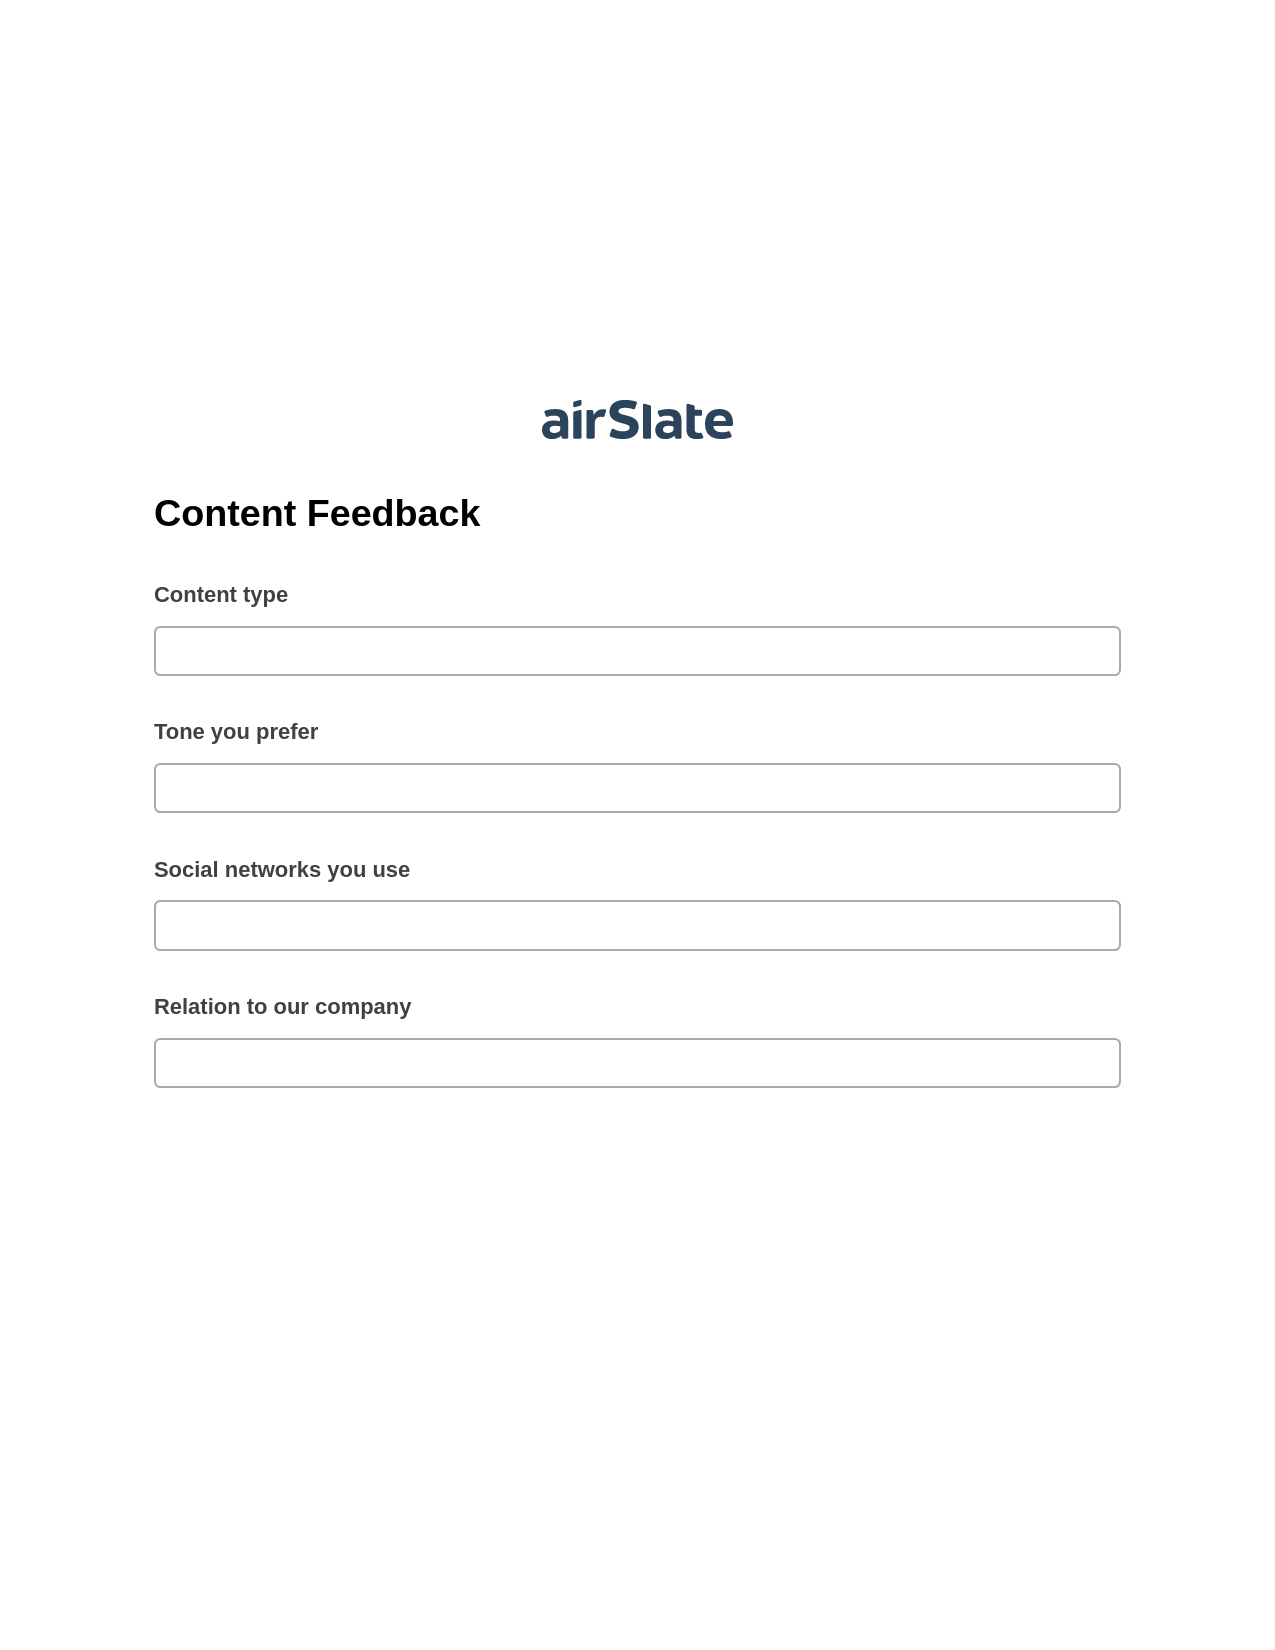 Content Feedback Pre-fill Document Bot, SendGrid send Campaign bot, Slack Notification Postfinish Bot